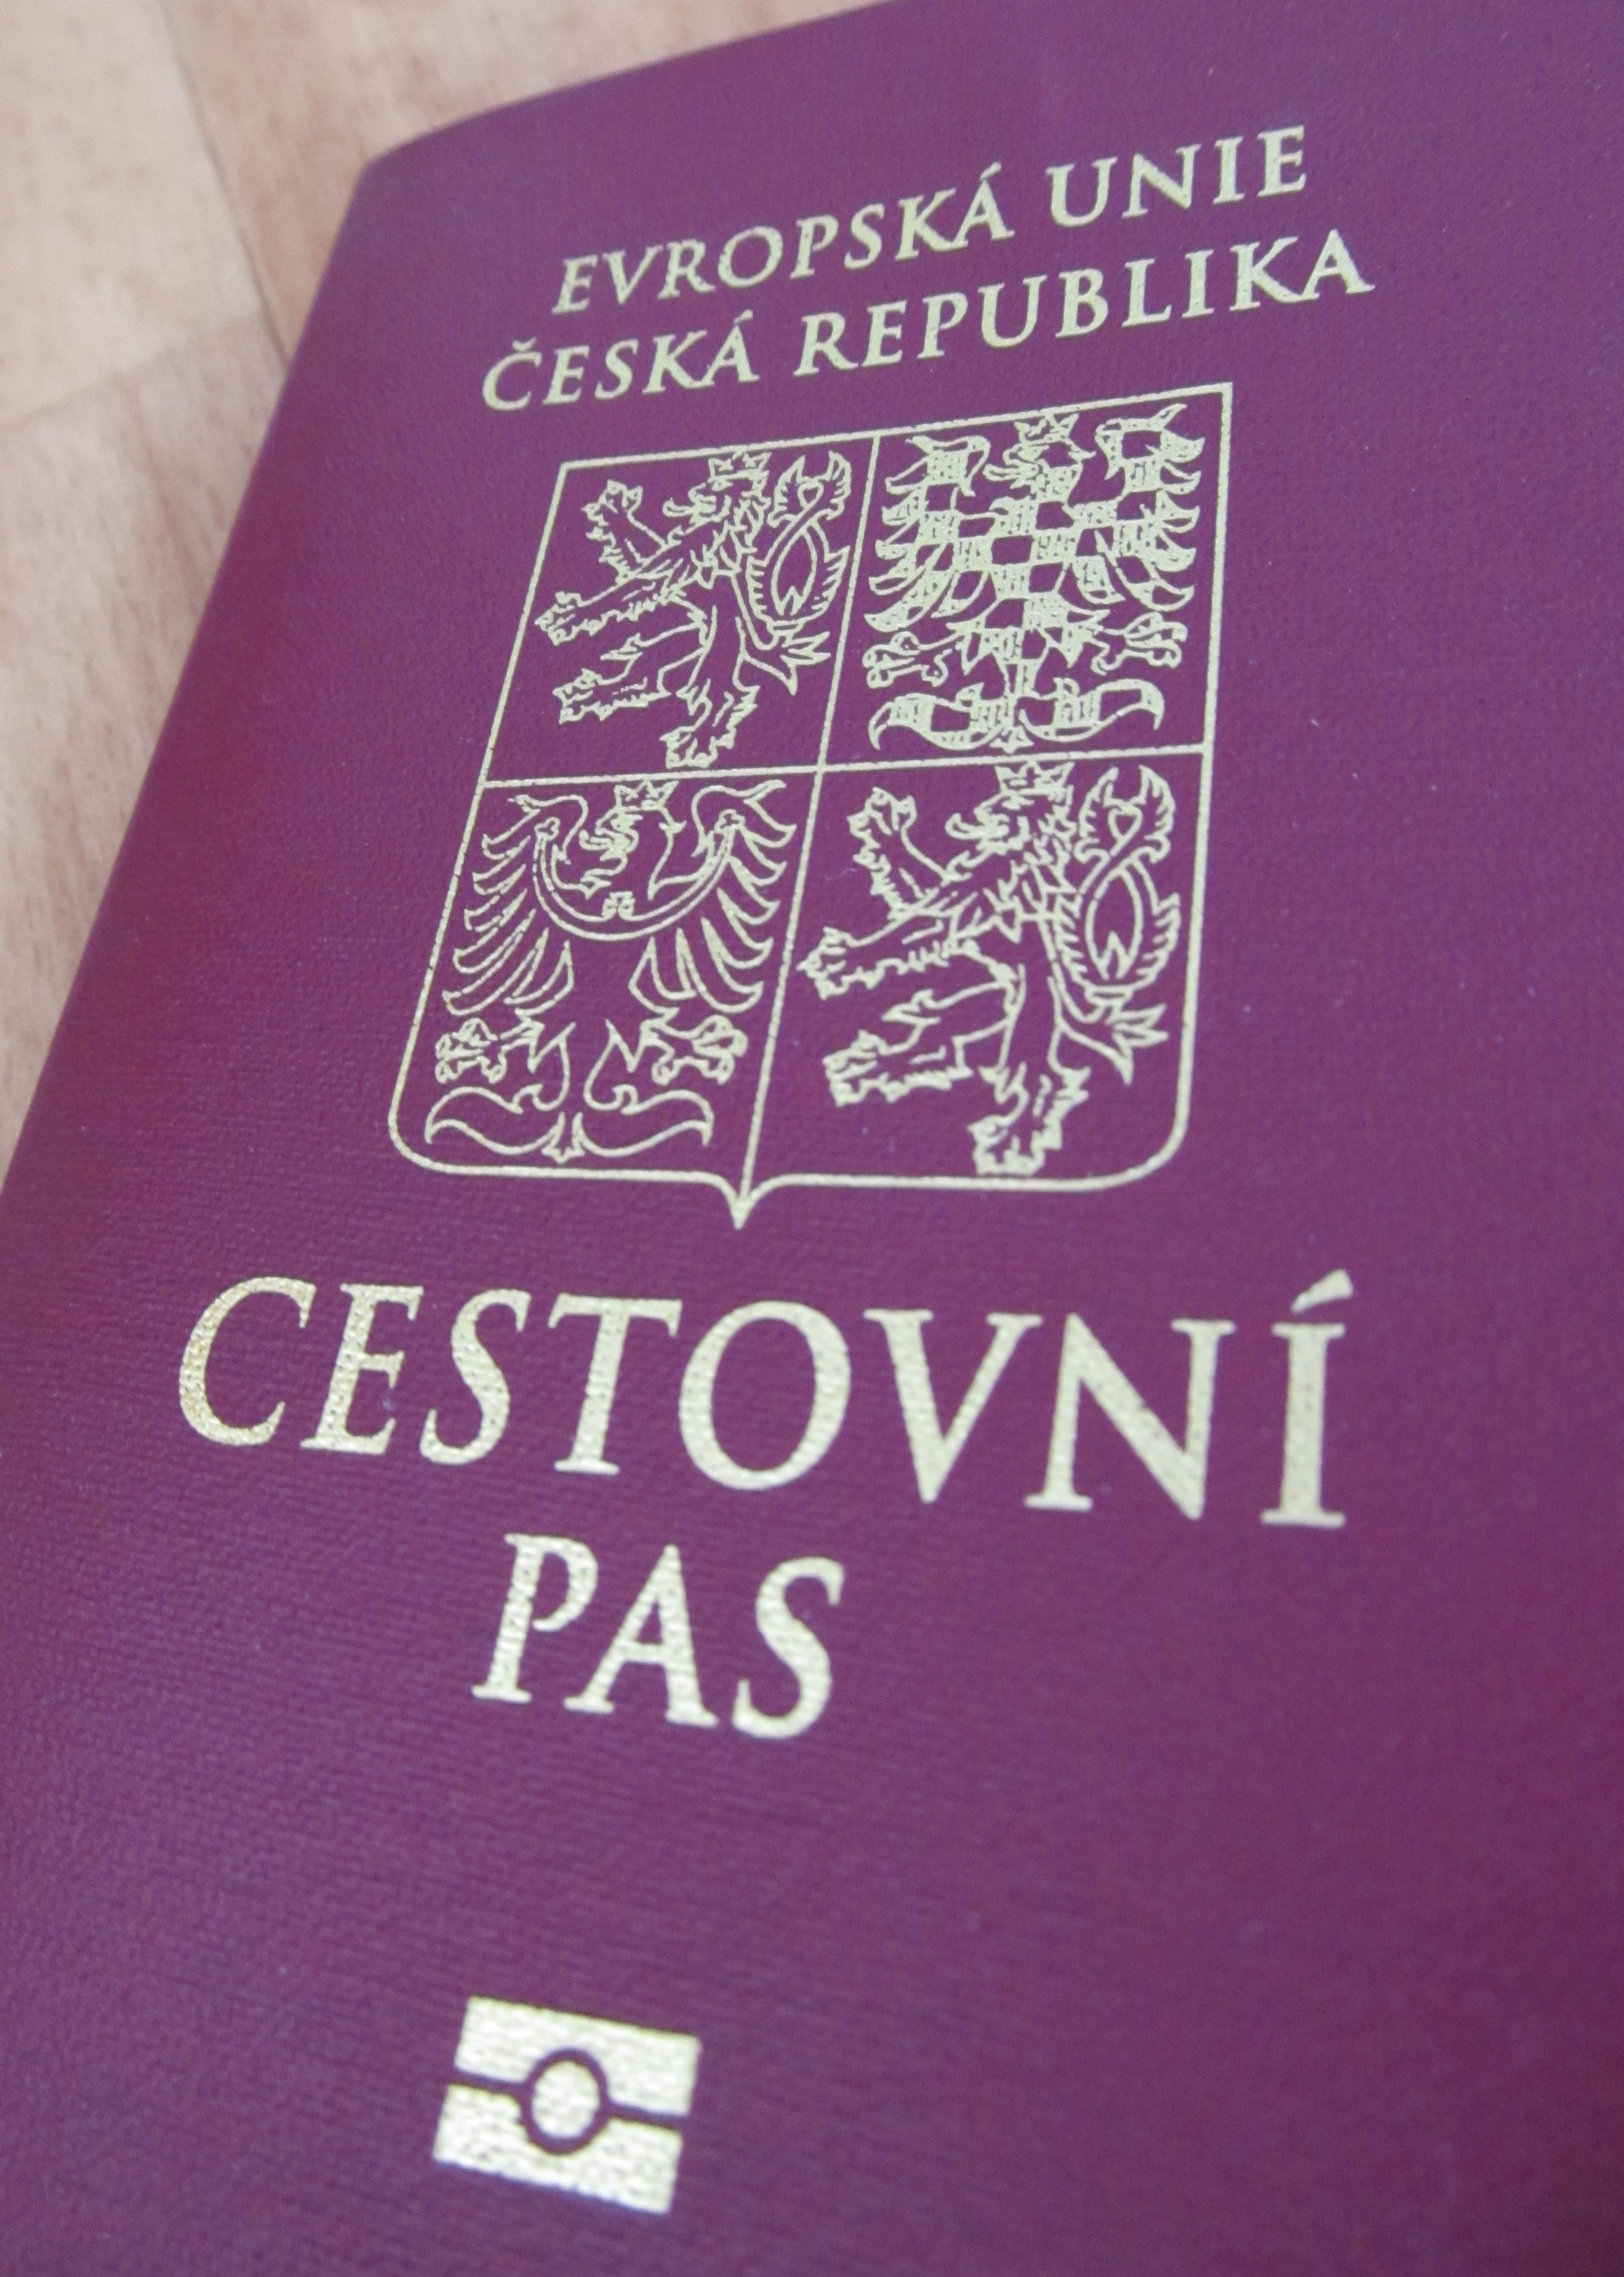 Vietnam visa requirements for Czech Republic citizen